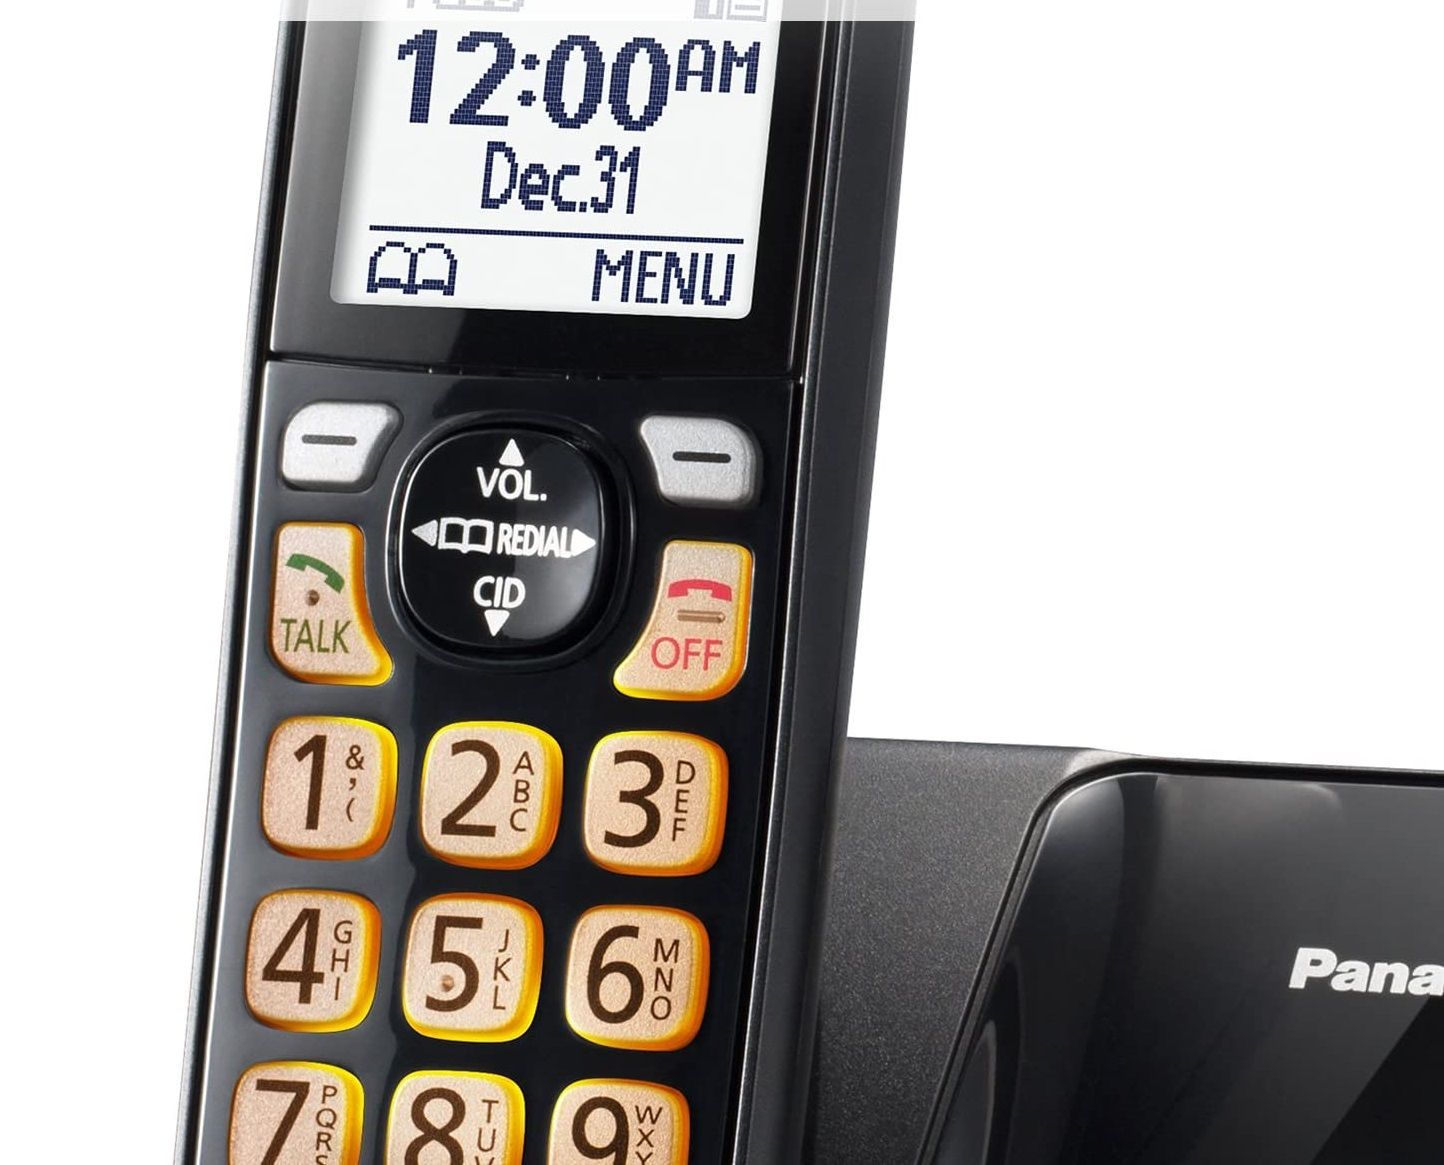 Panasonic Expandable Cordless Phone System c